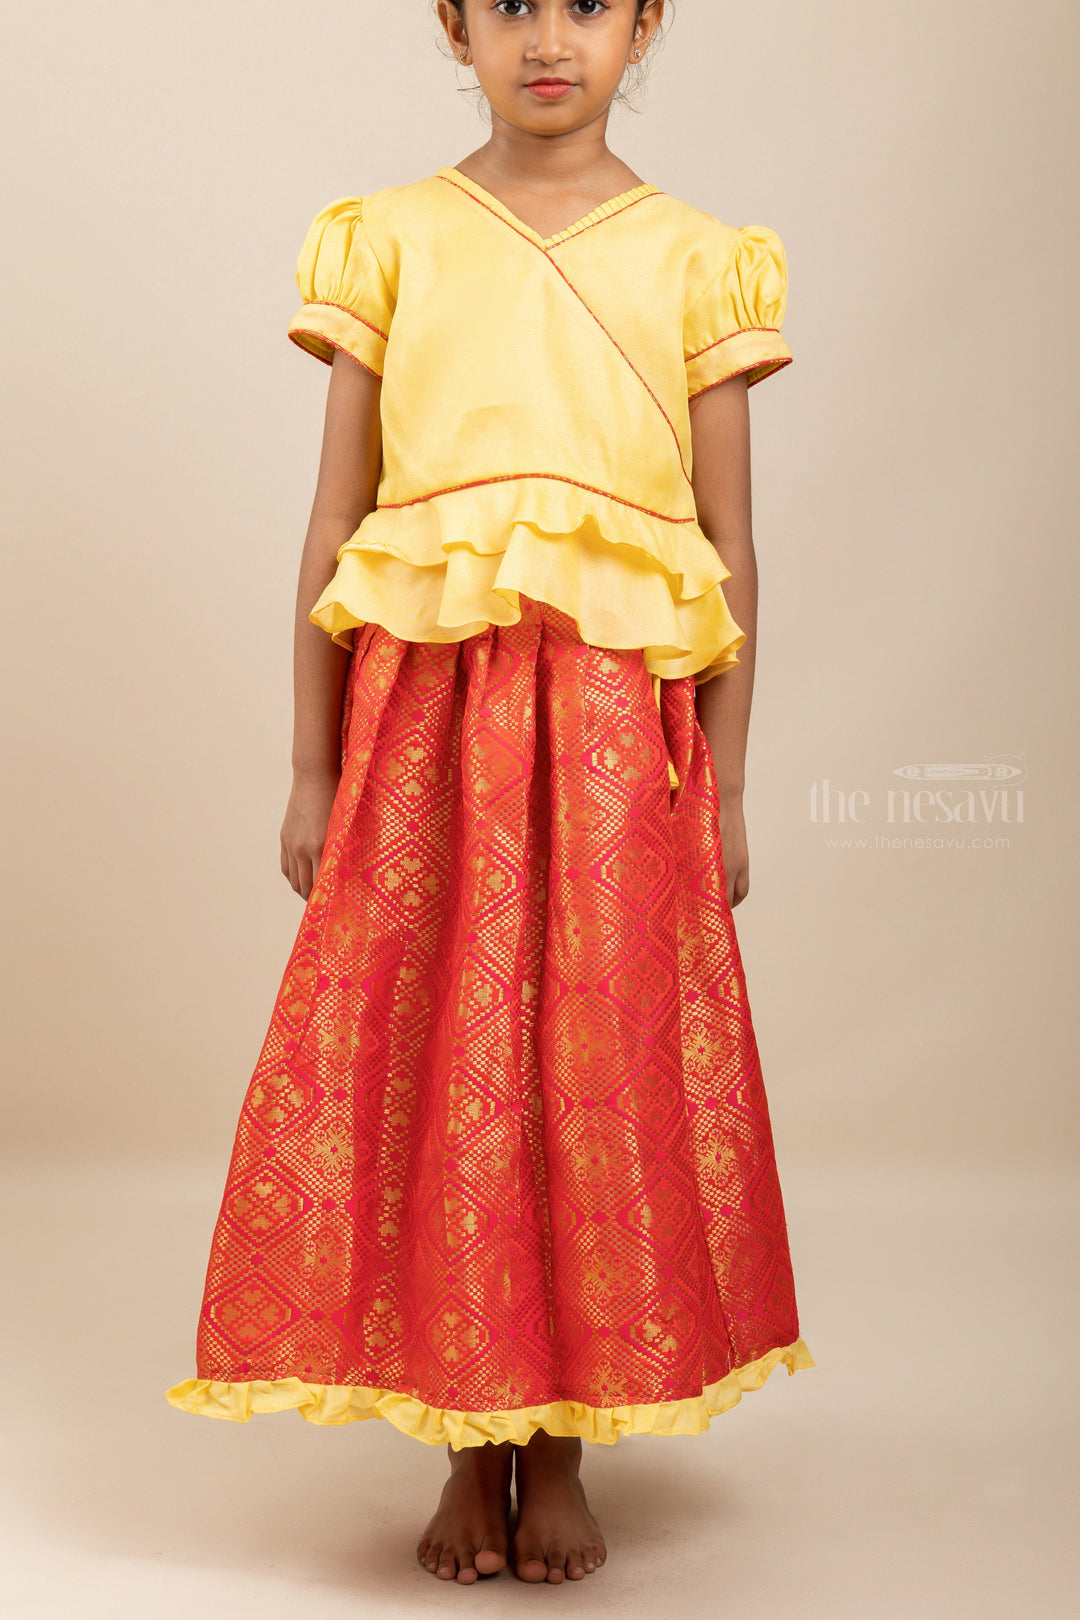 The Nesavu Pattu Pavadai Banaras Red Brocade Silk Langa With Bright Yellow Designer Ethnic Top Nesavu Pattu Langa voni Girl Baby | New Silk Pavada designs | the Nesavu